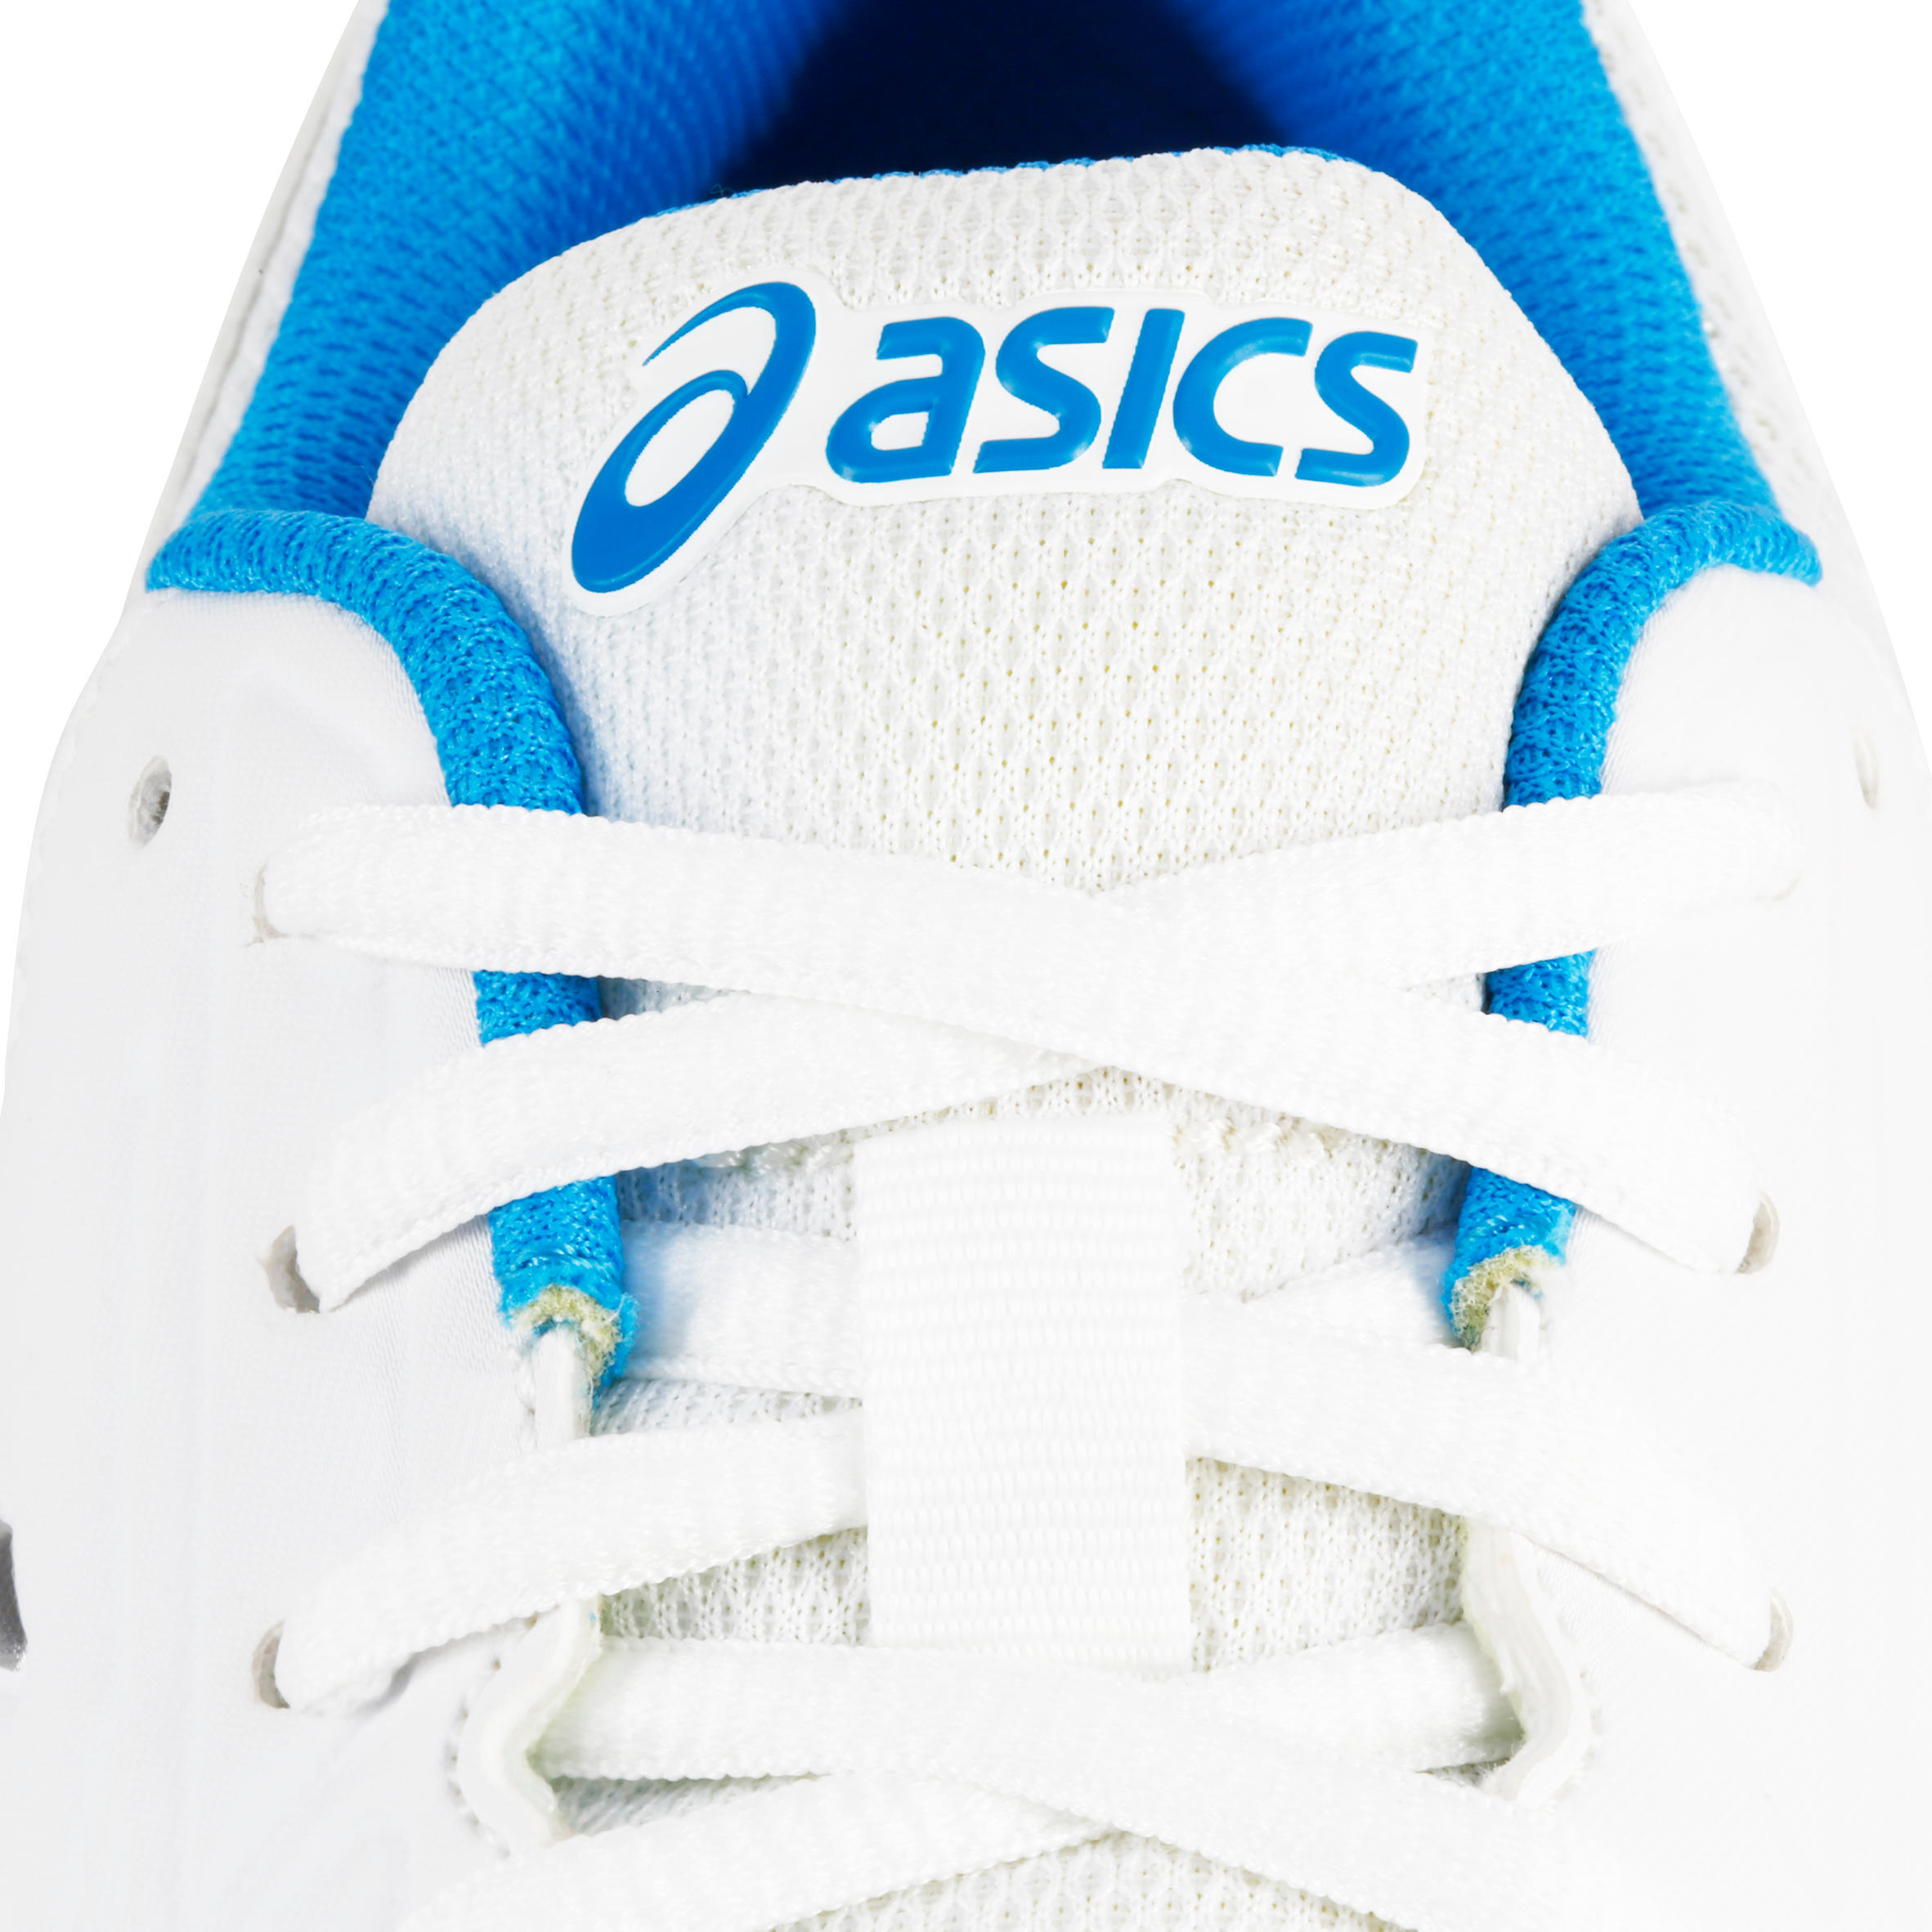 asics carpet tennis shoes